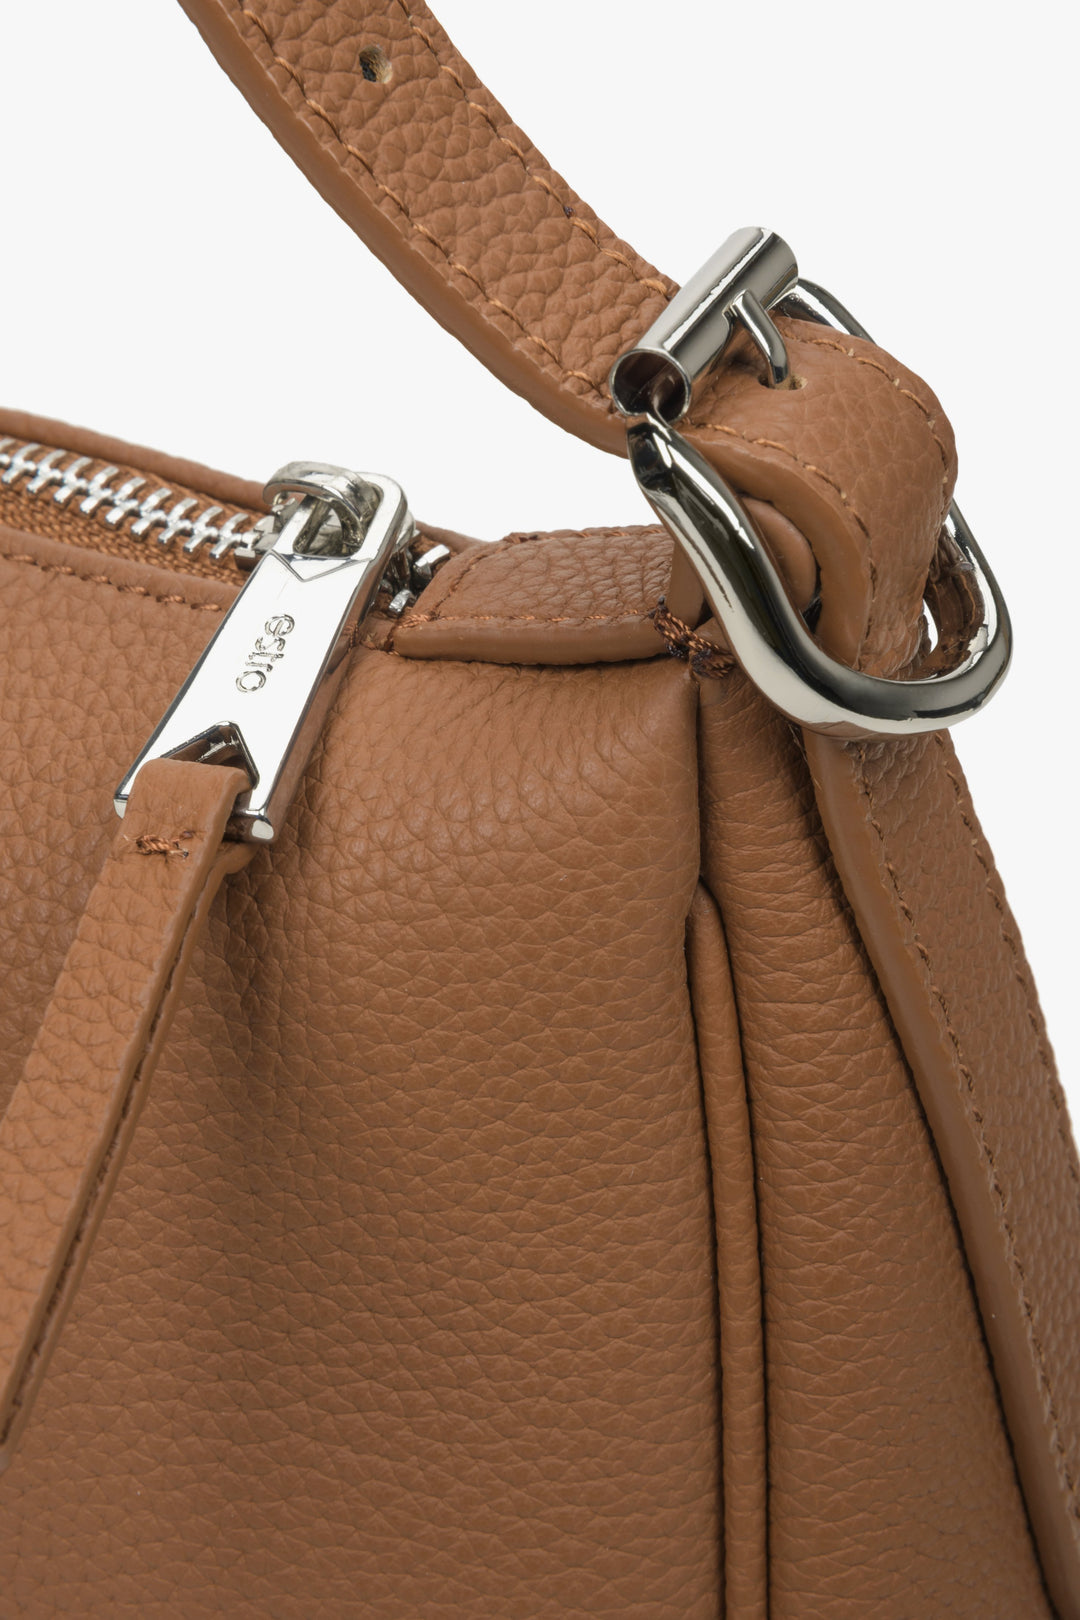 Leather shoulder bag in brown - close-up on the details.